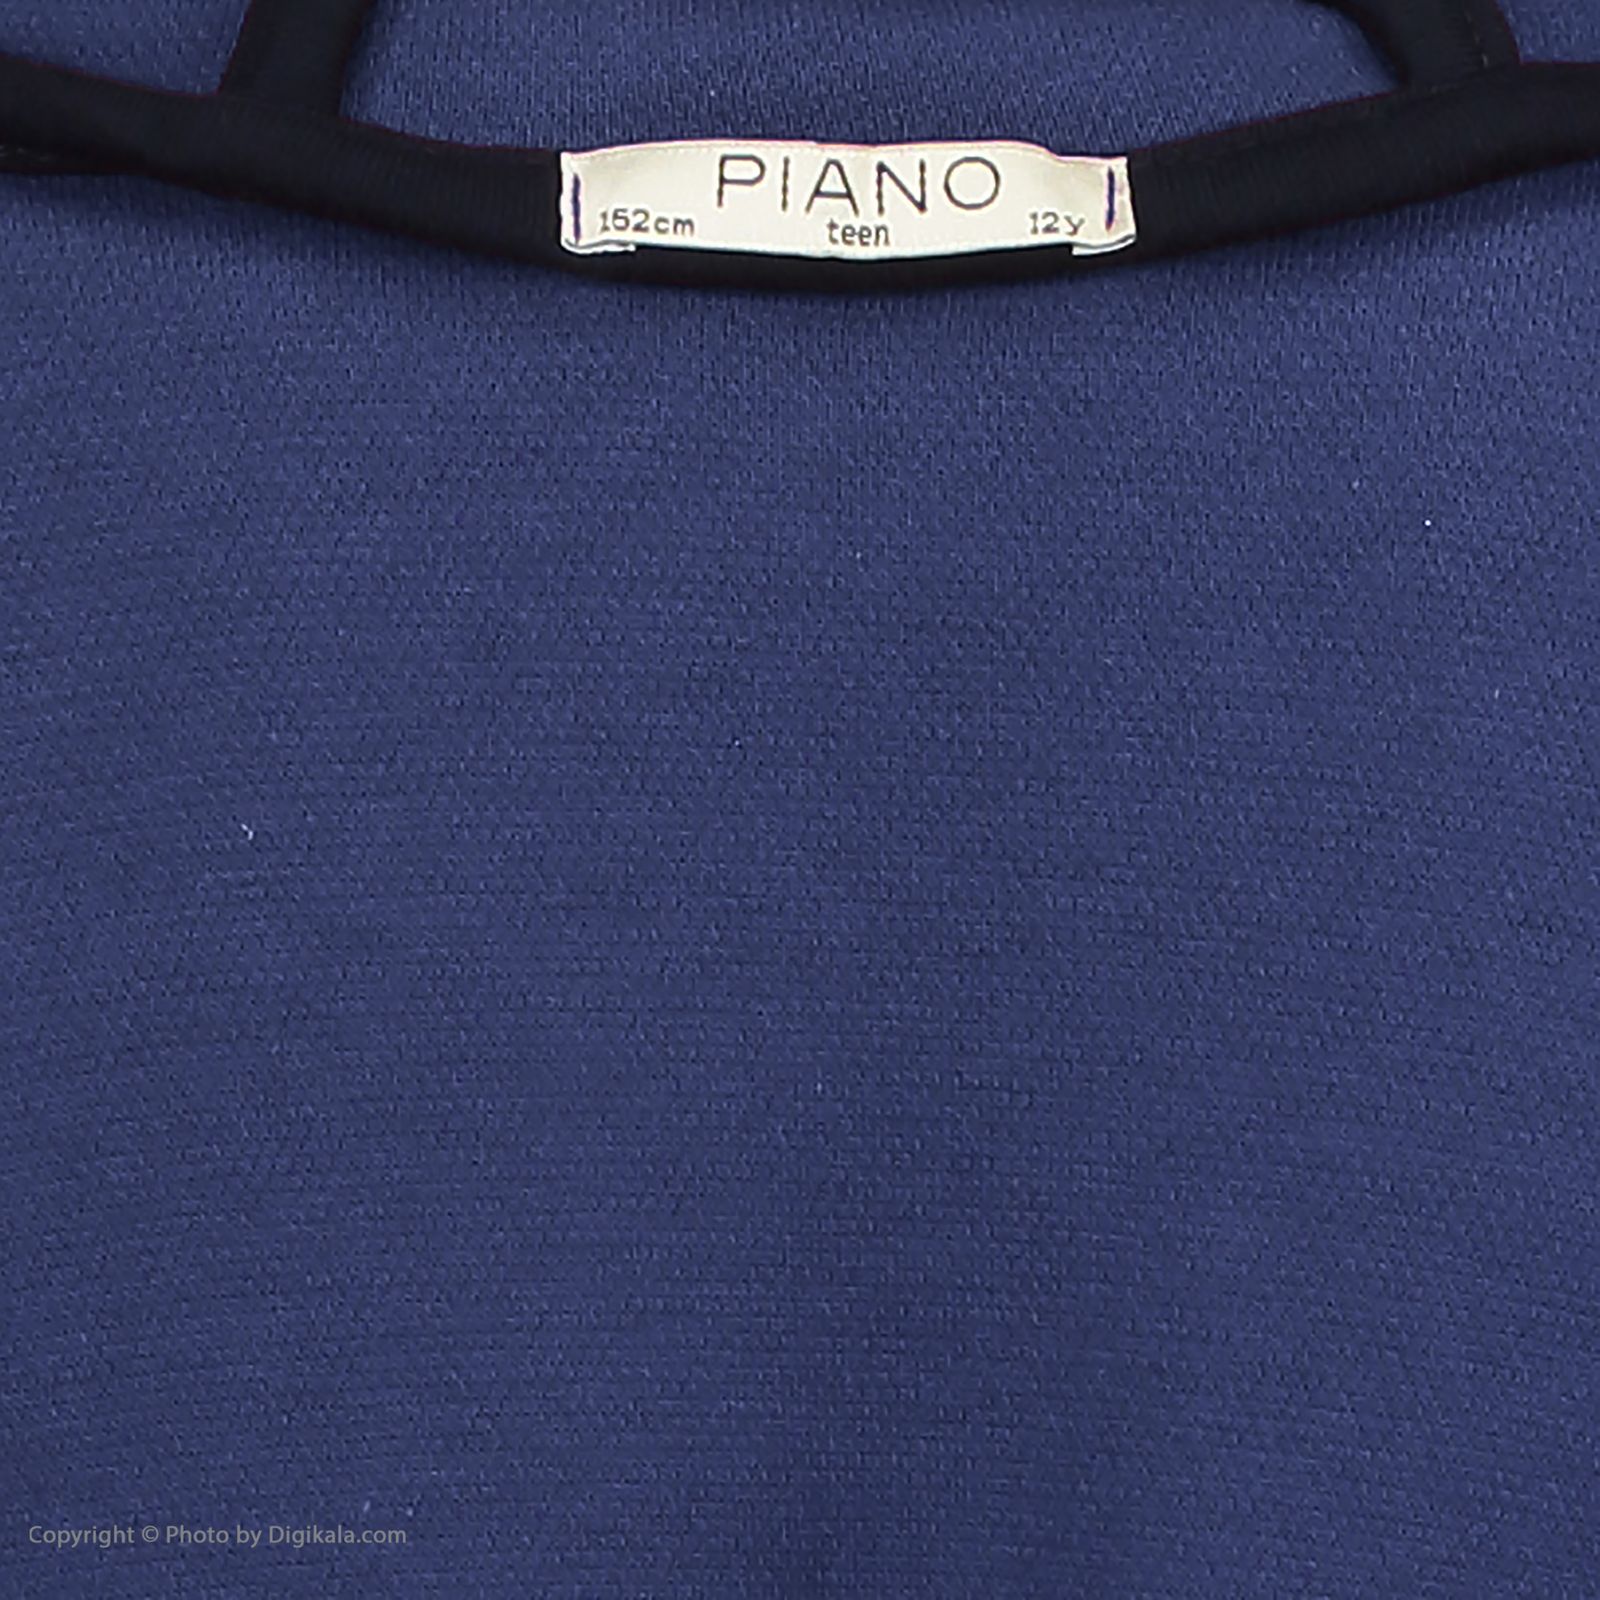 رویه دخترانه پیانو مدل 01691-79 -  - 6